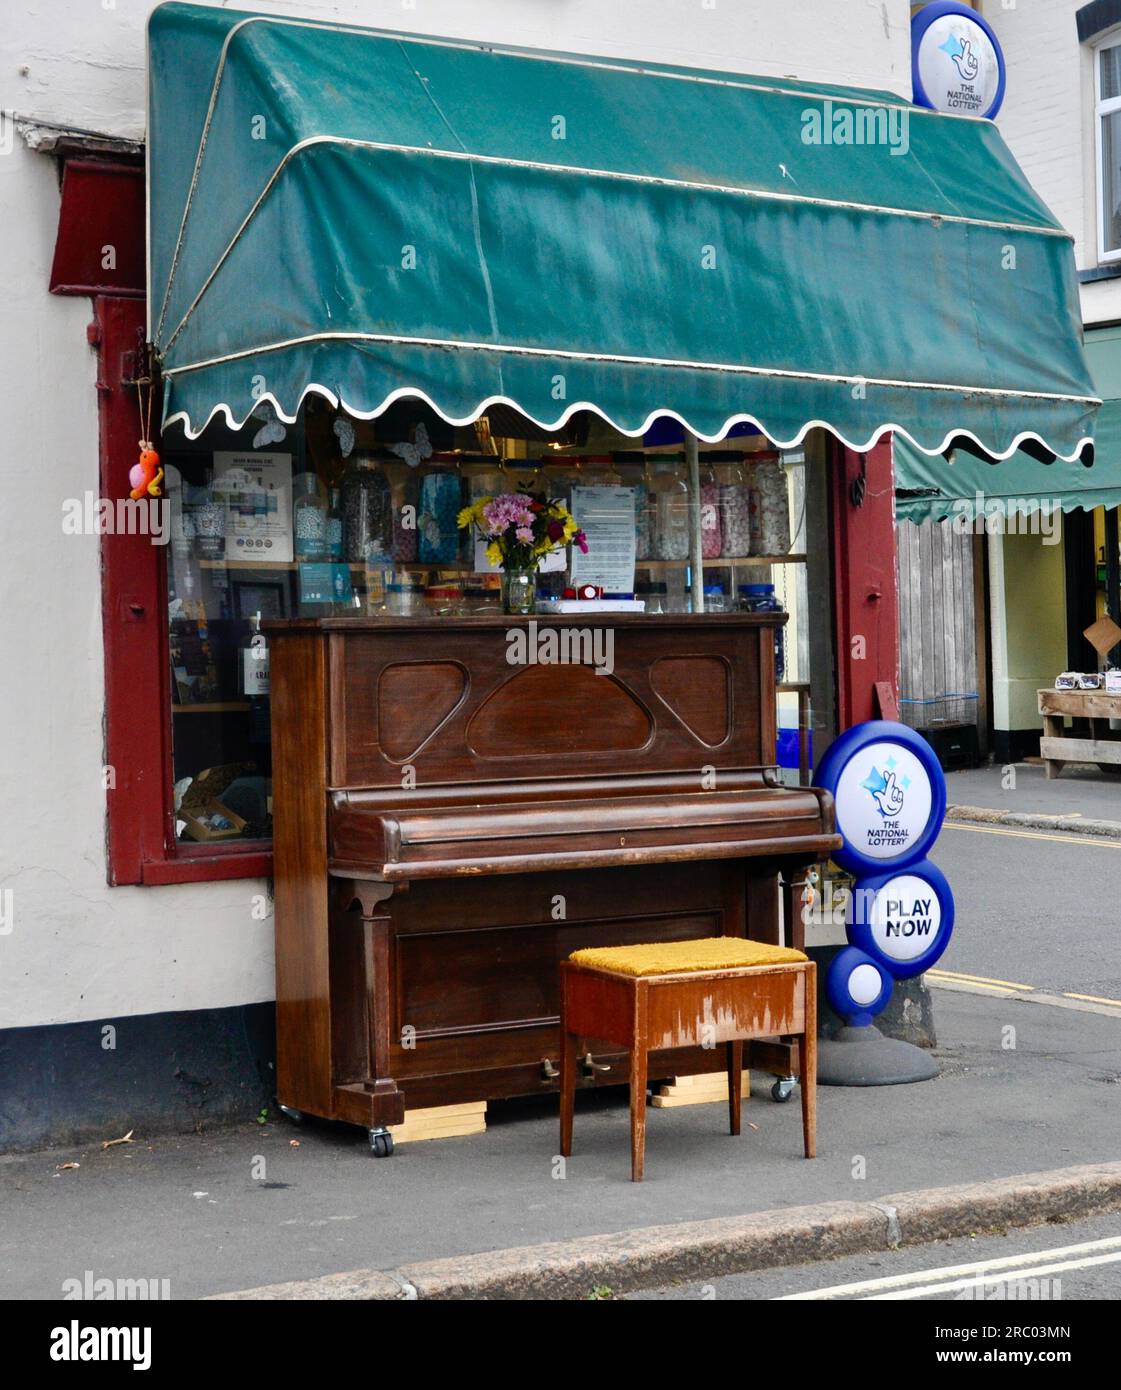 Suzan Vagoose - Moretonhampstead Community Piano - Play Now Stock Photo